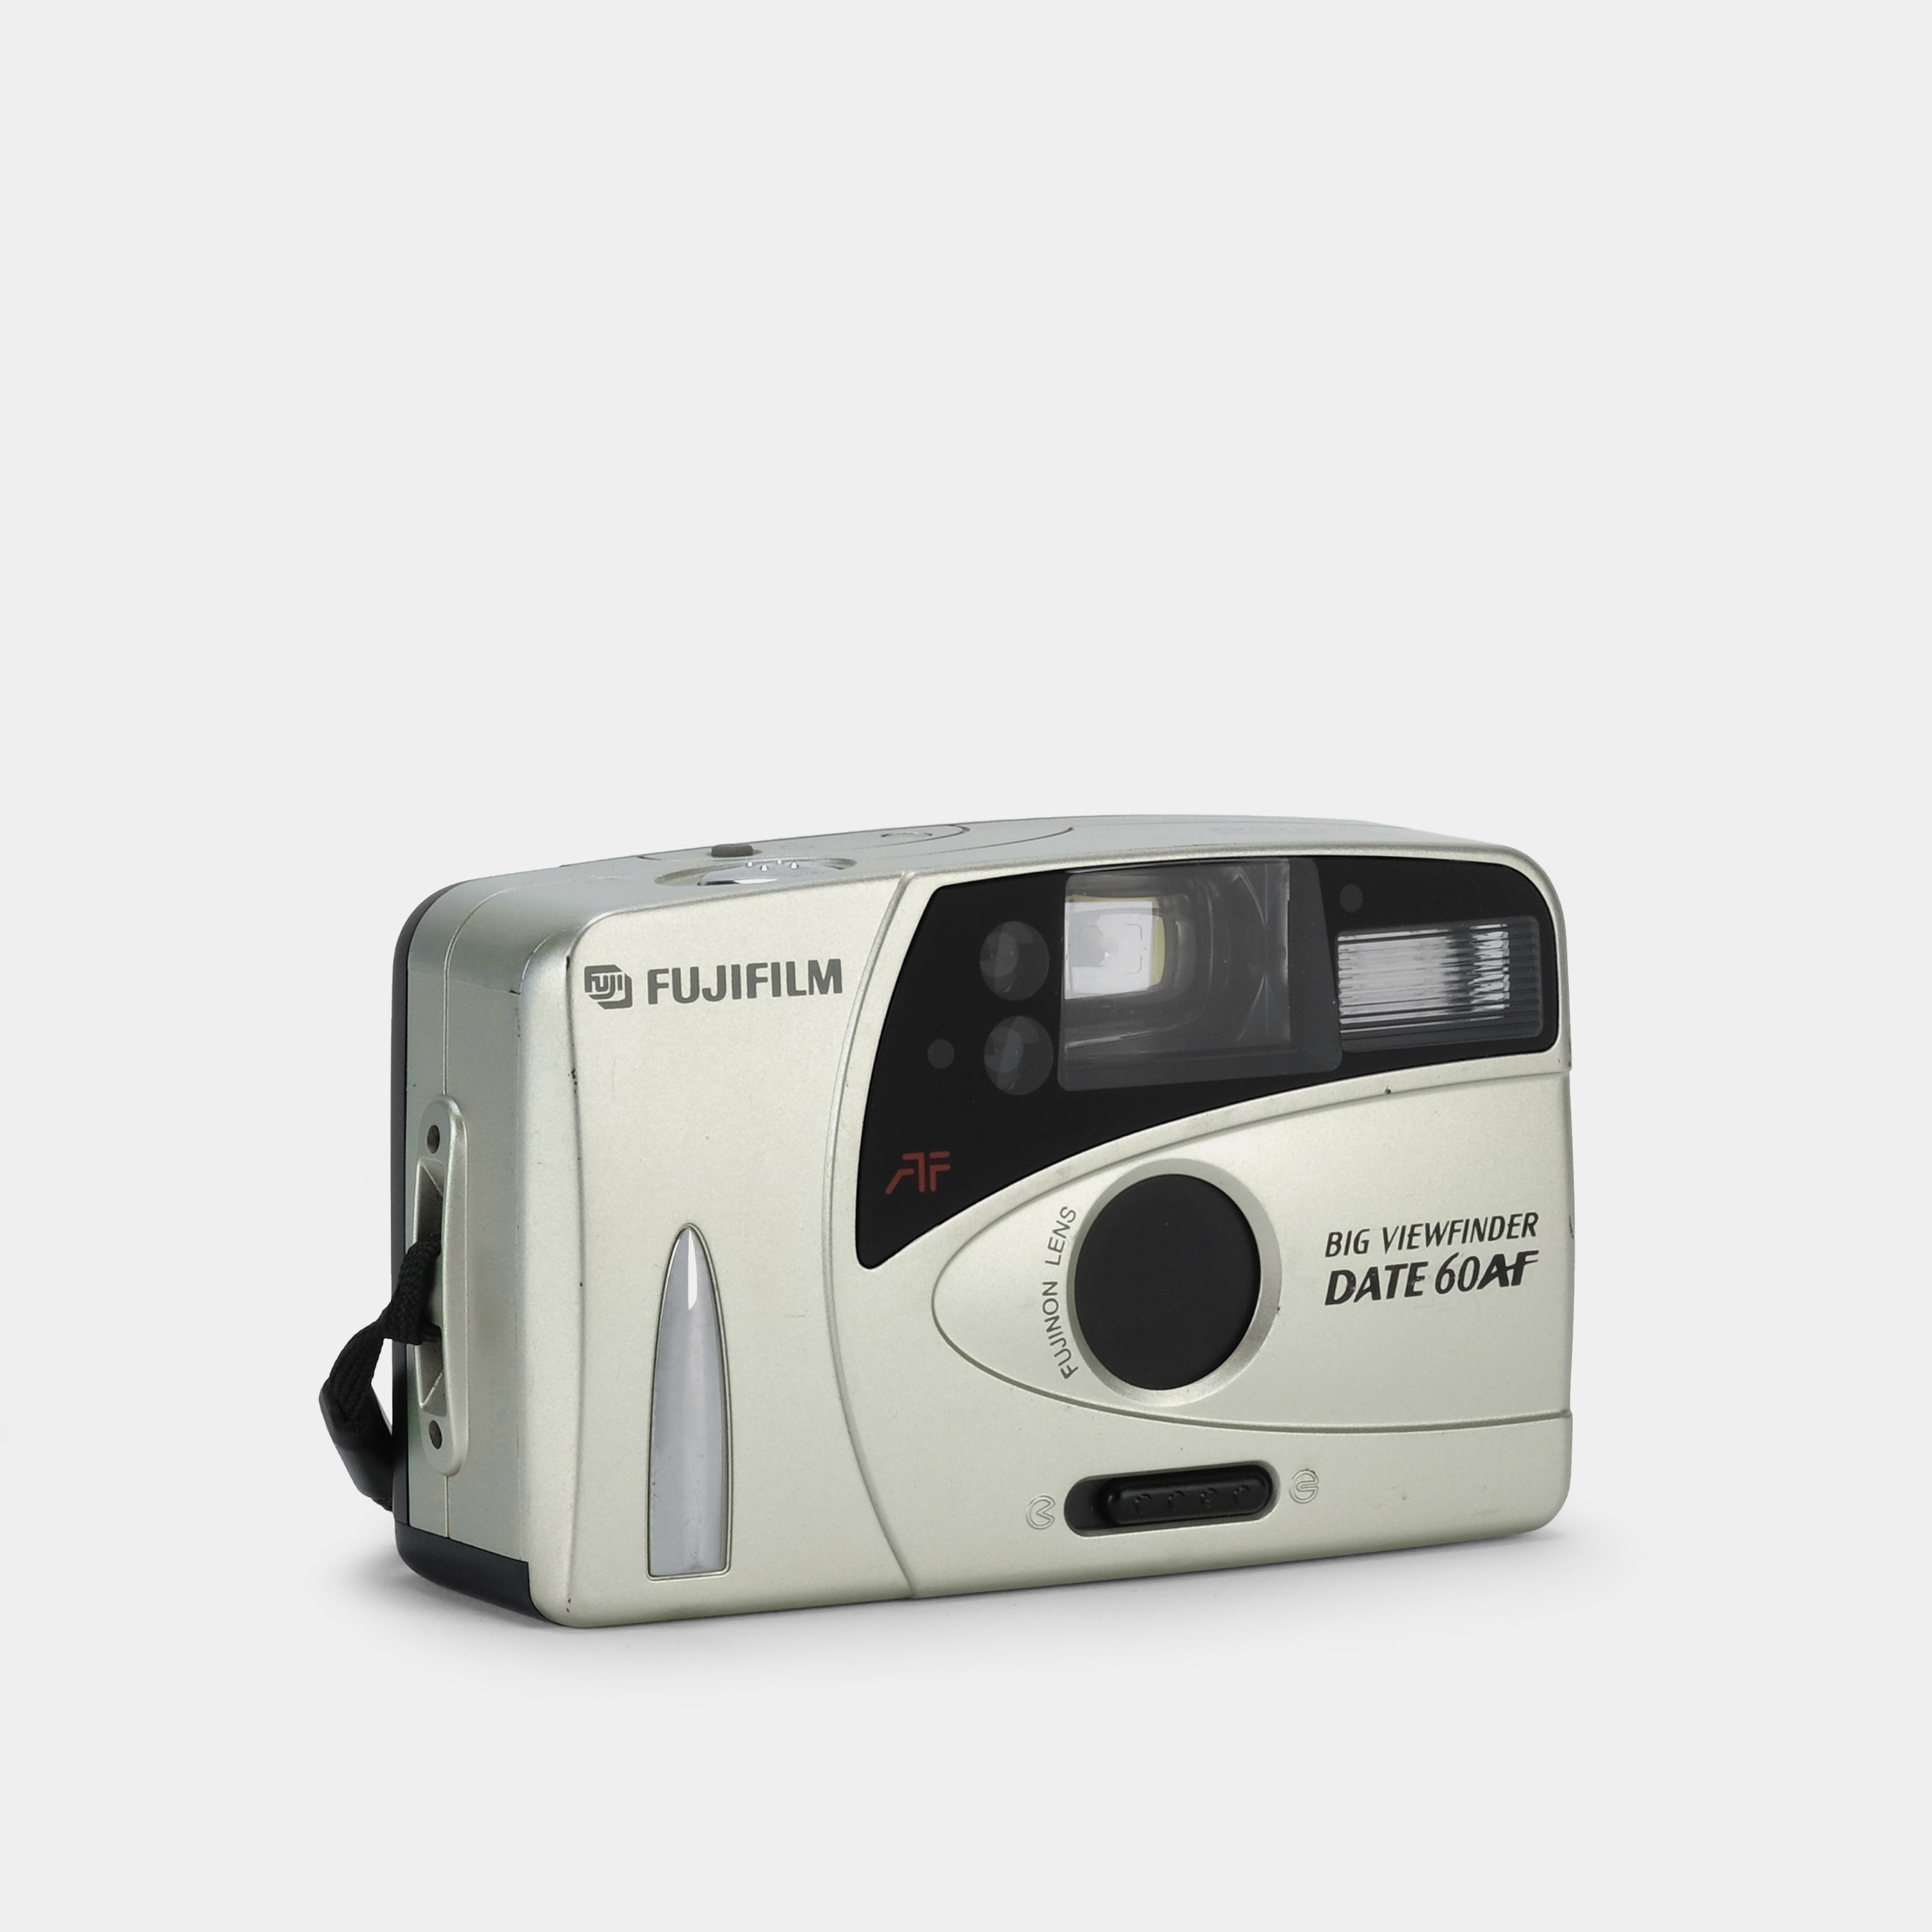 Fujifilm Big Viewfinder Date 60AF 35mm Point and Shoot Film Camera